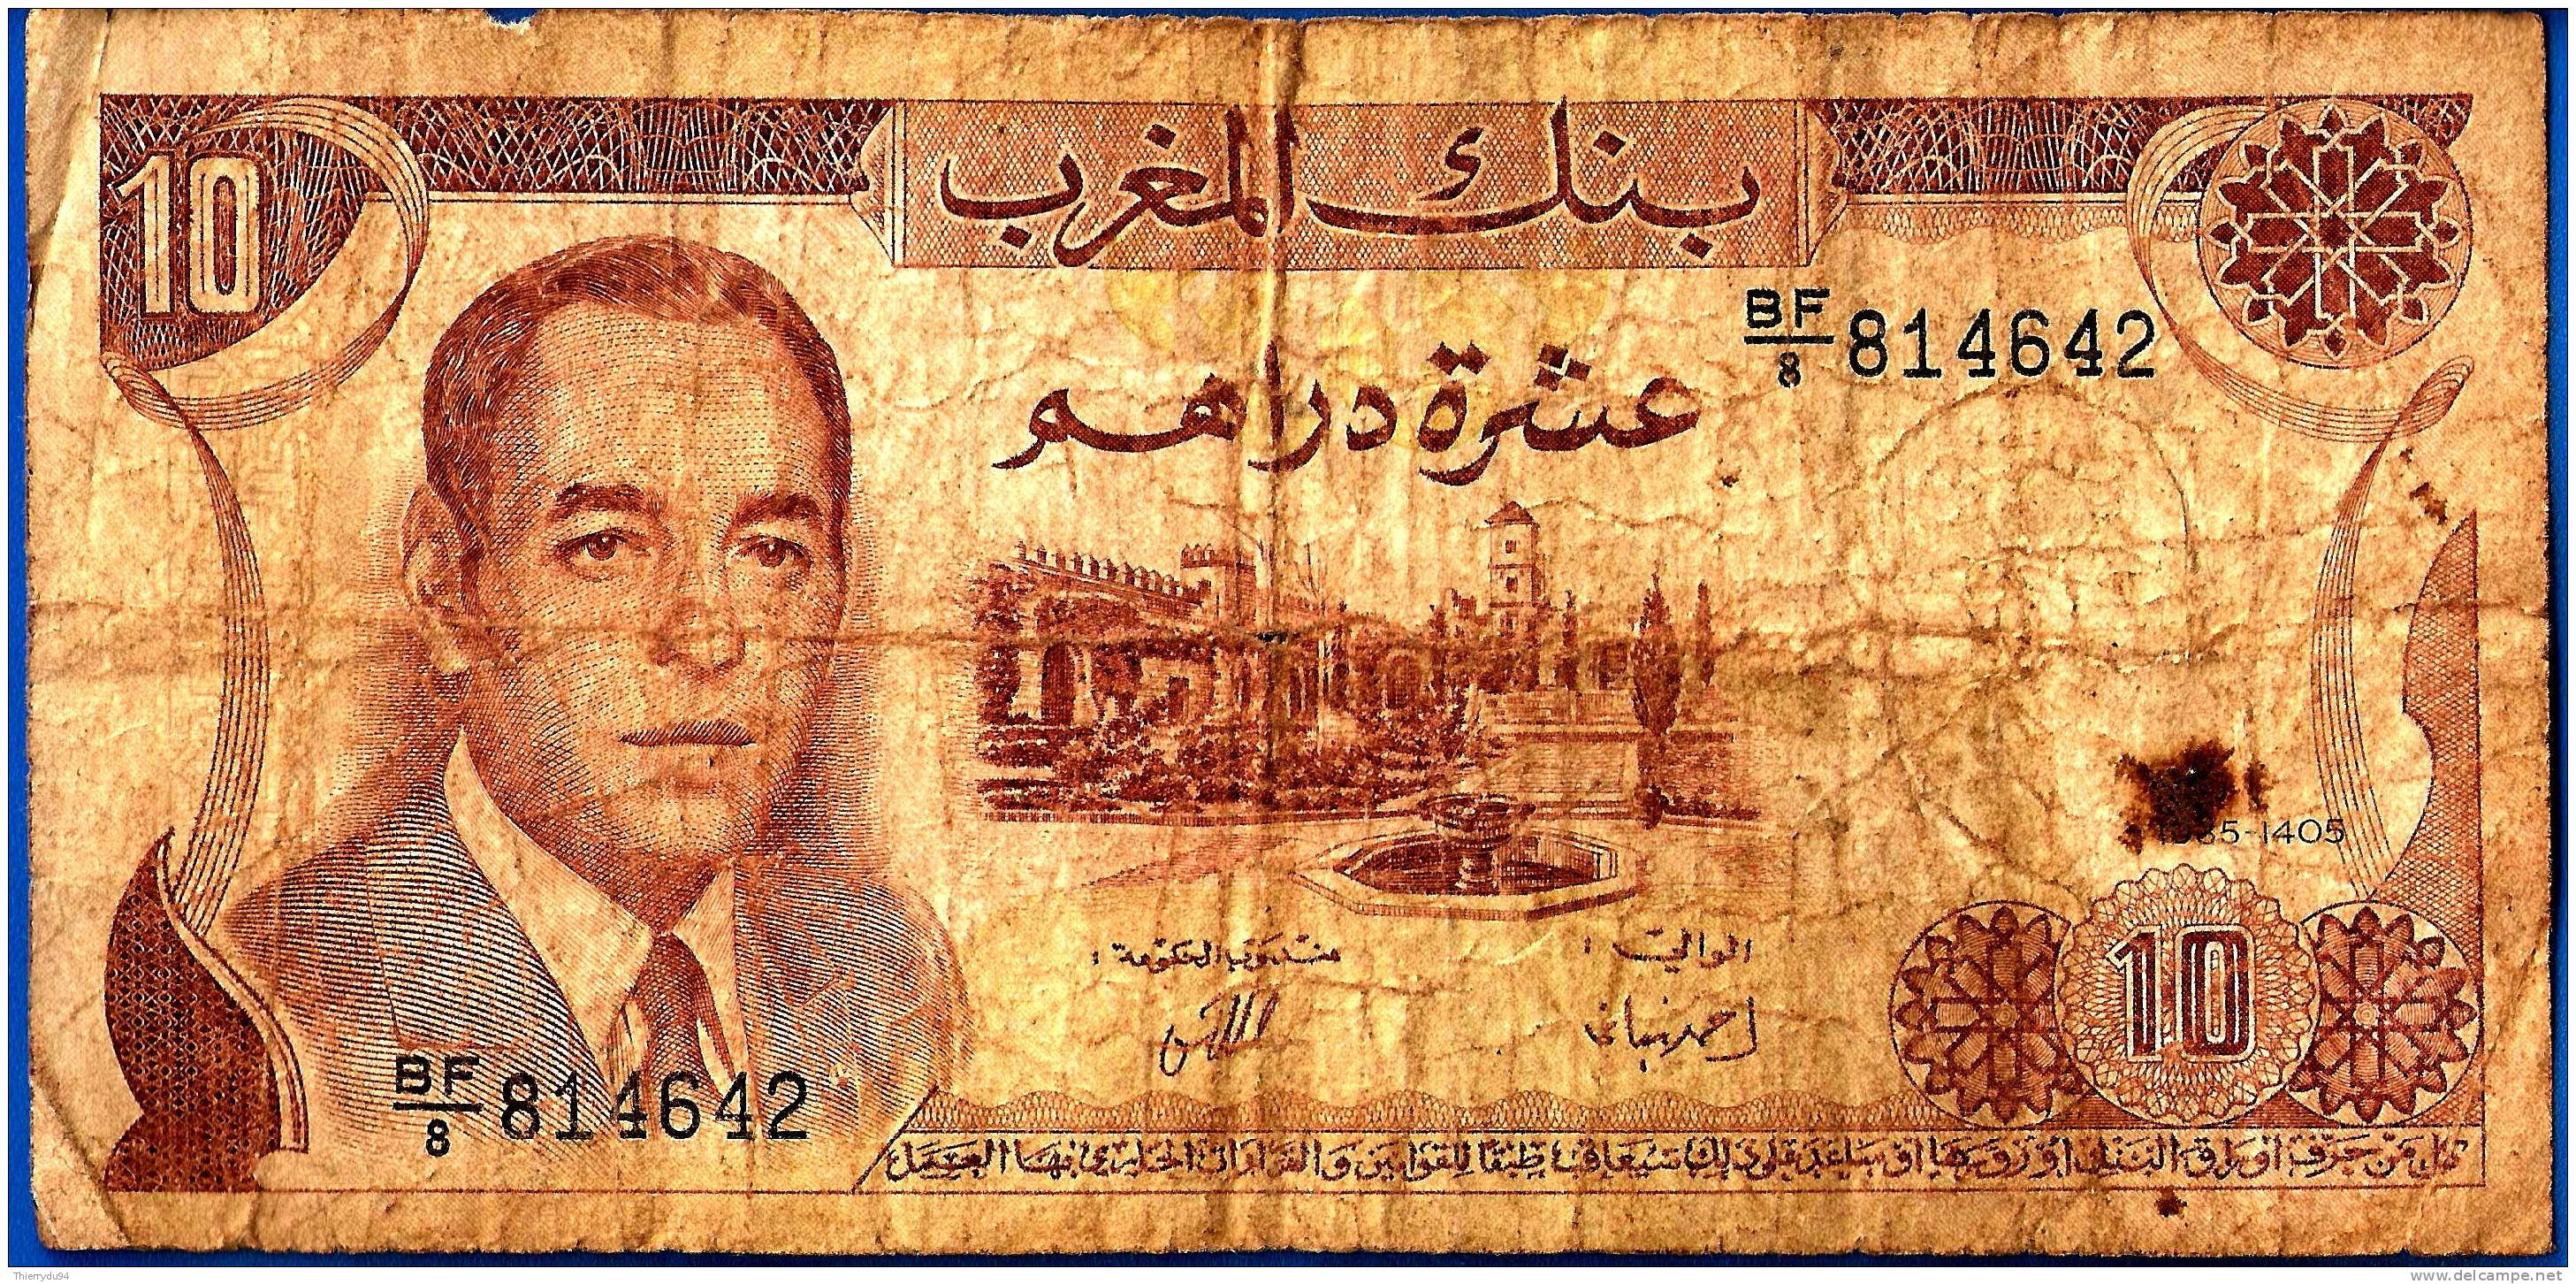 Maroc 10 Dirhams 1985 Signature 9 Morocco Afrique Africa Paypal Moneybookers OK - Maroc